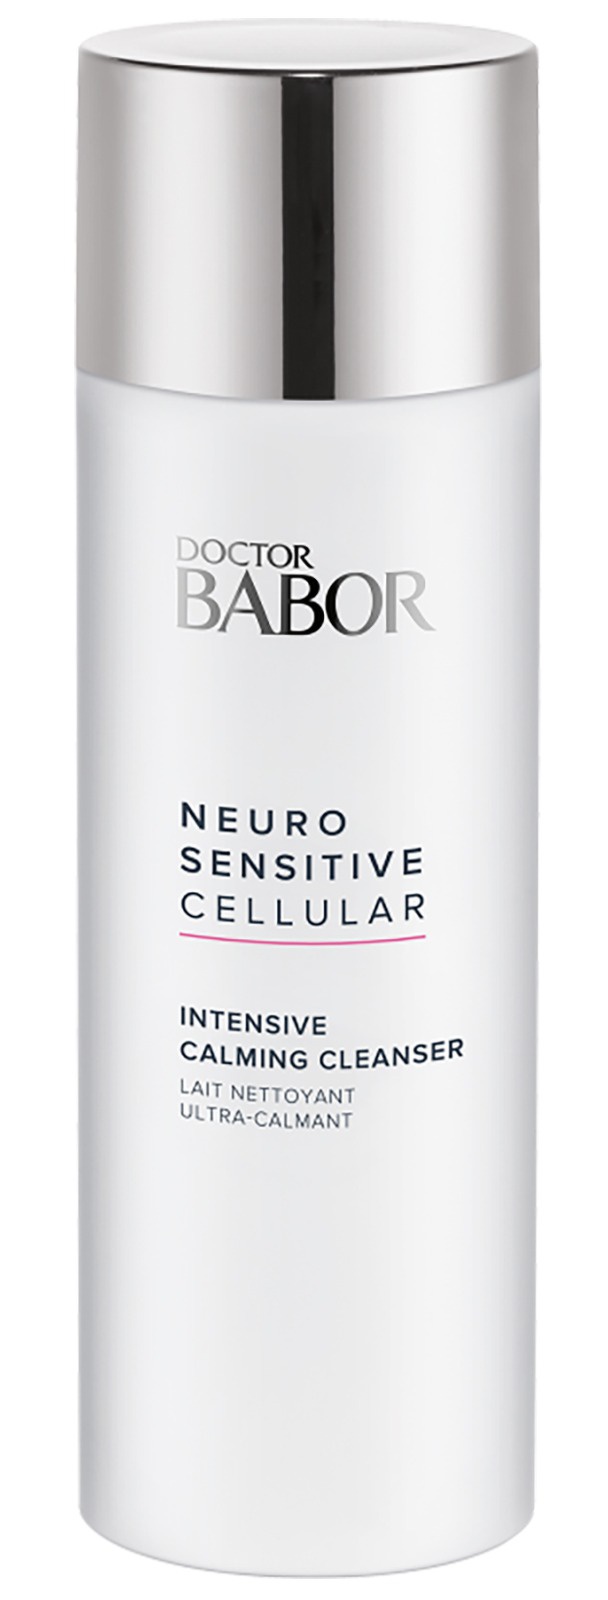 Doctor Babor Neuro Sensitive Cellular Intensive Calming Cleanser